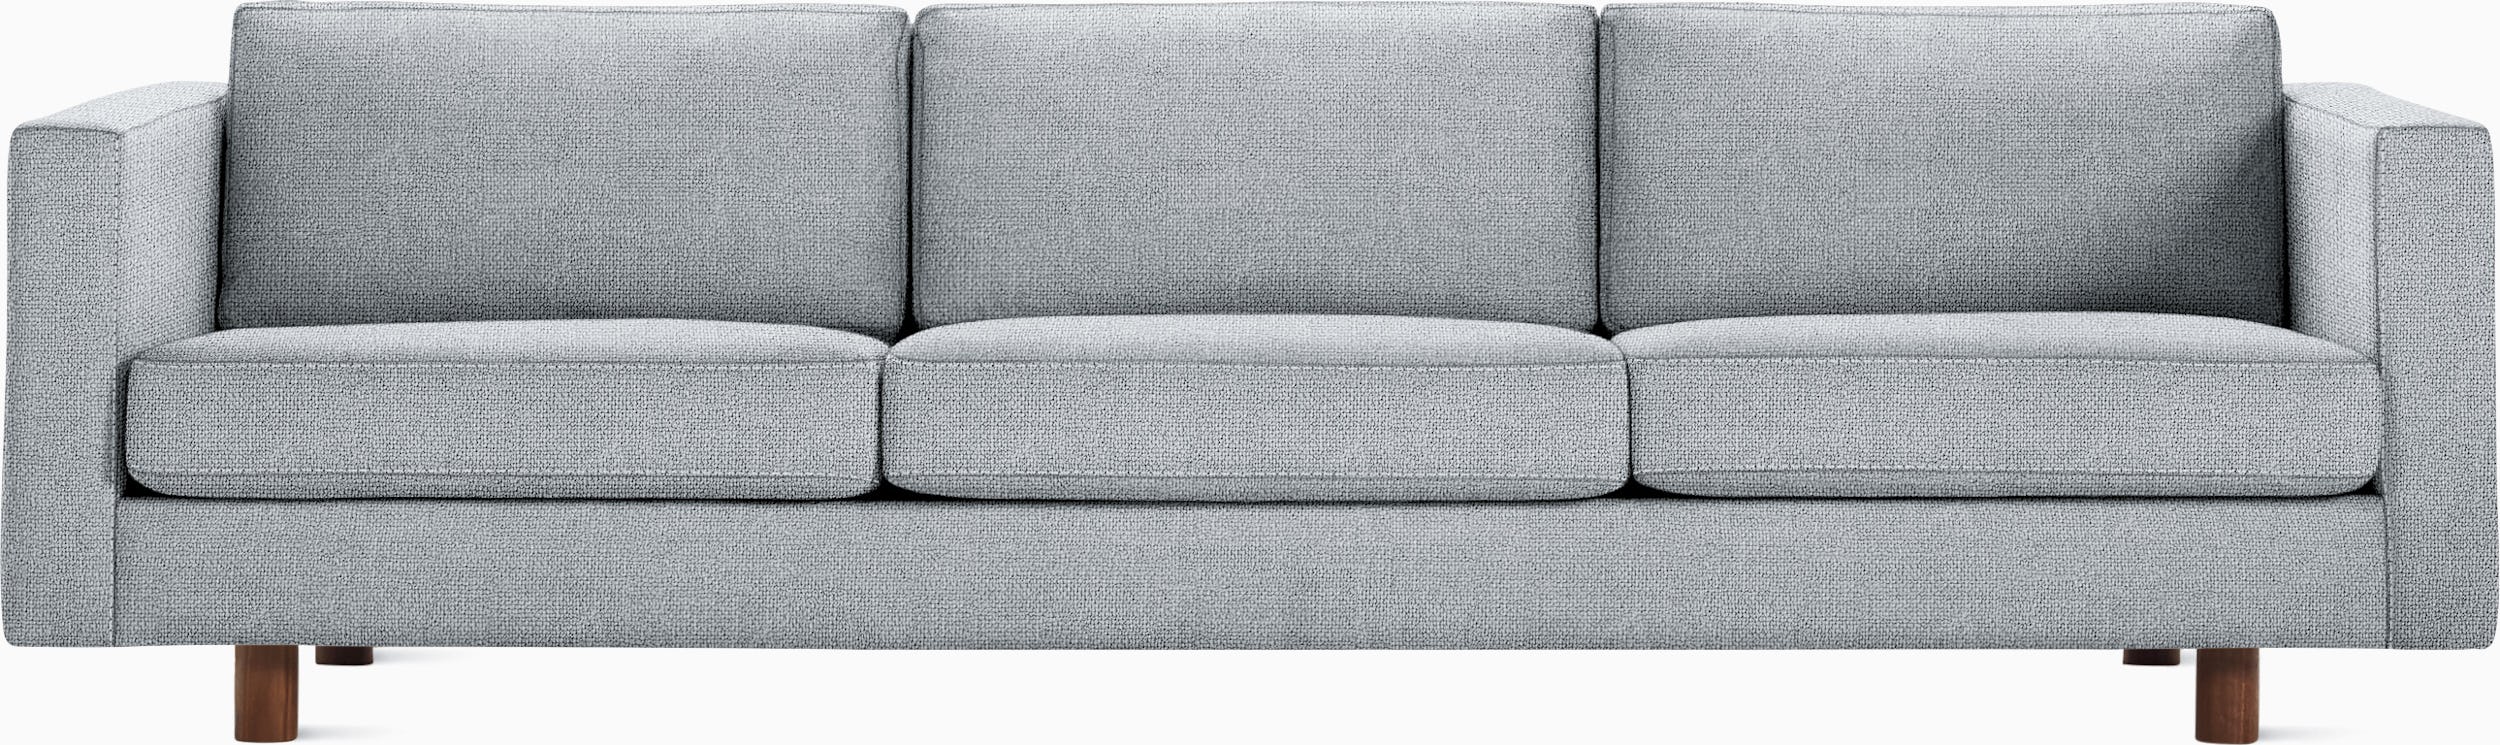 The Ergonomic Sofa - The New York Times